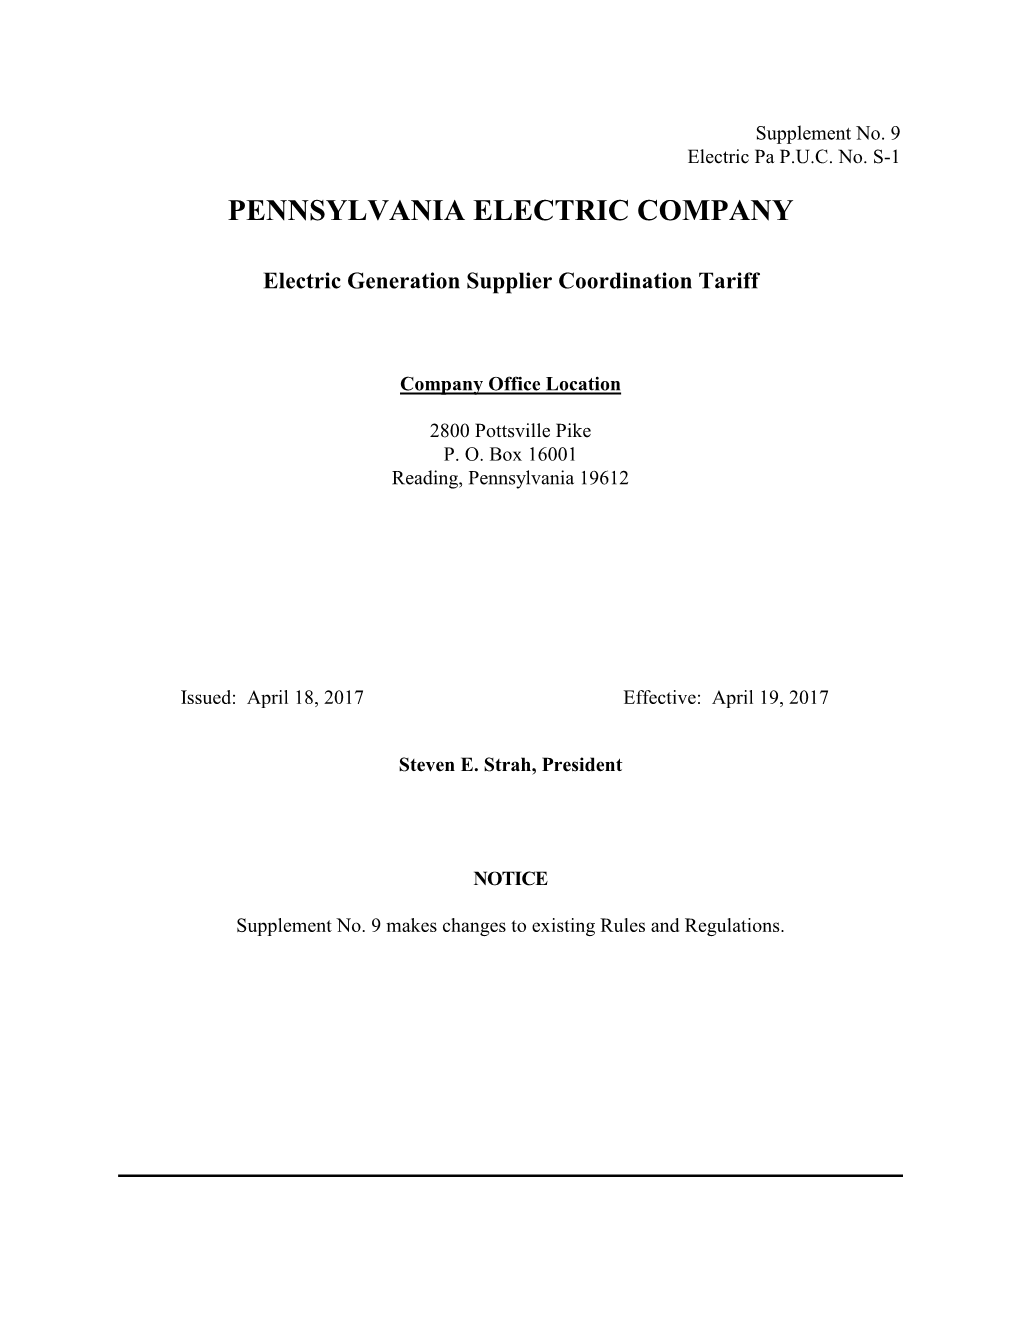 Pennsylvania Electric Company